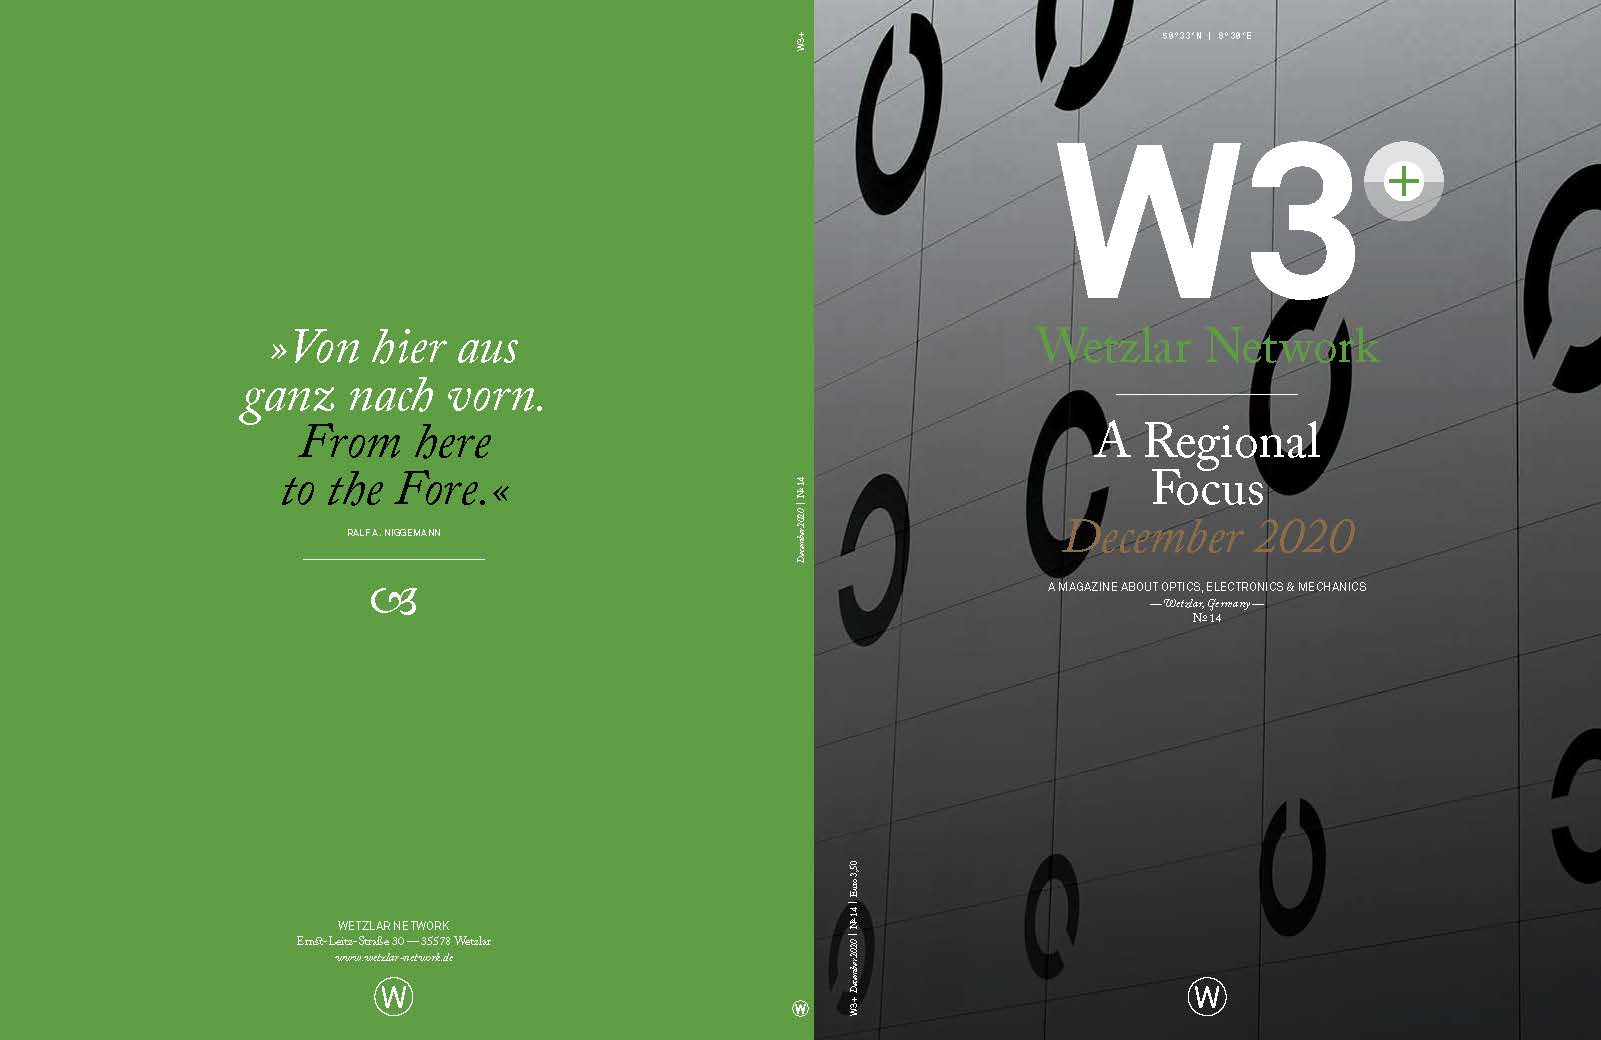 W3+ Wetzlar Network - A Regional Focus